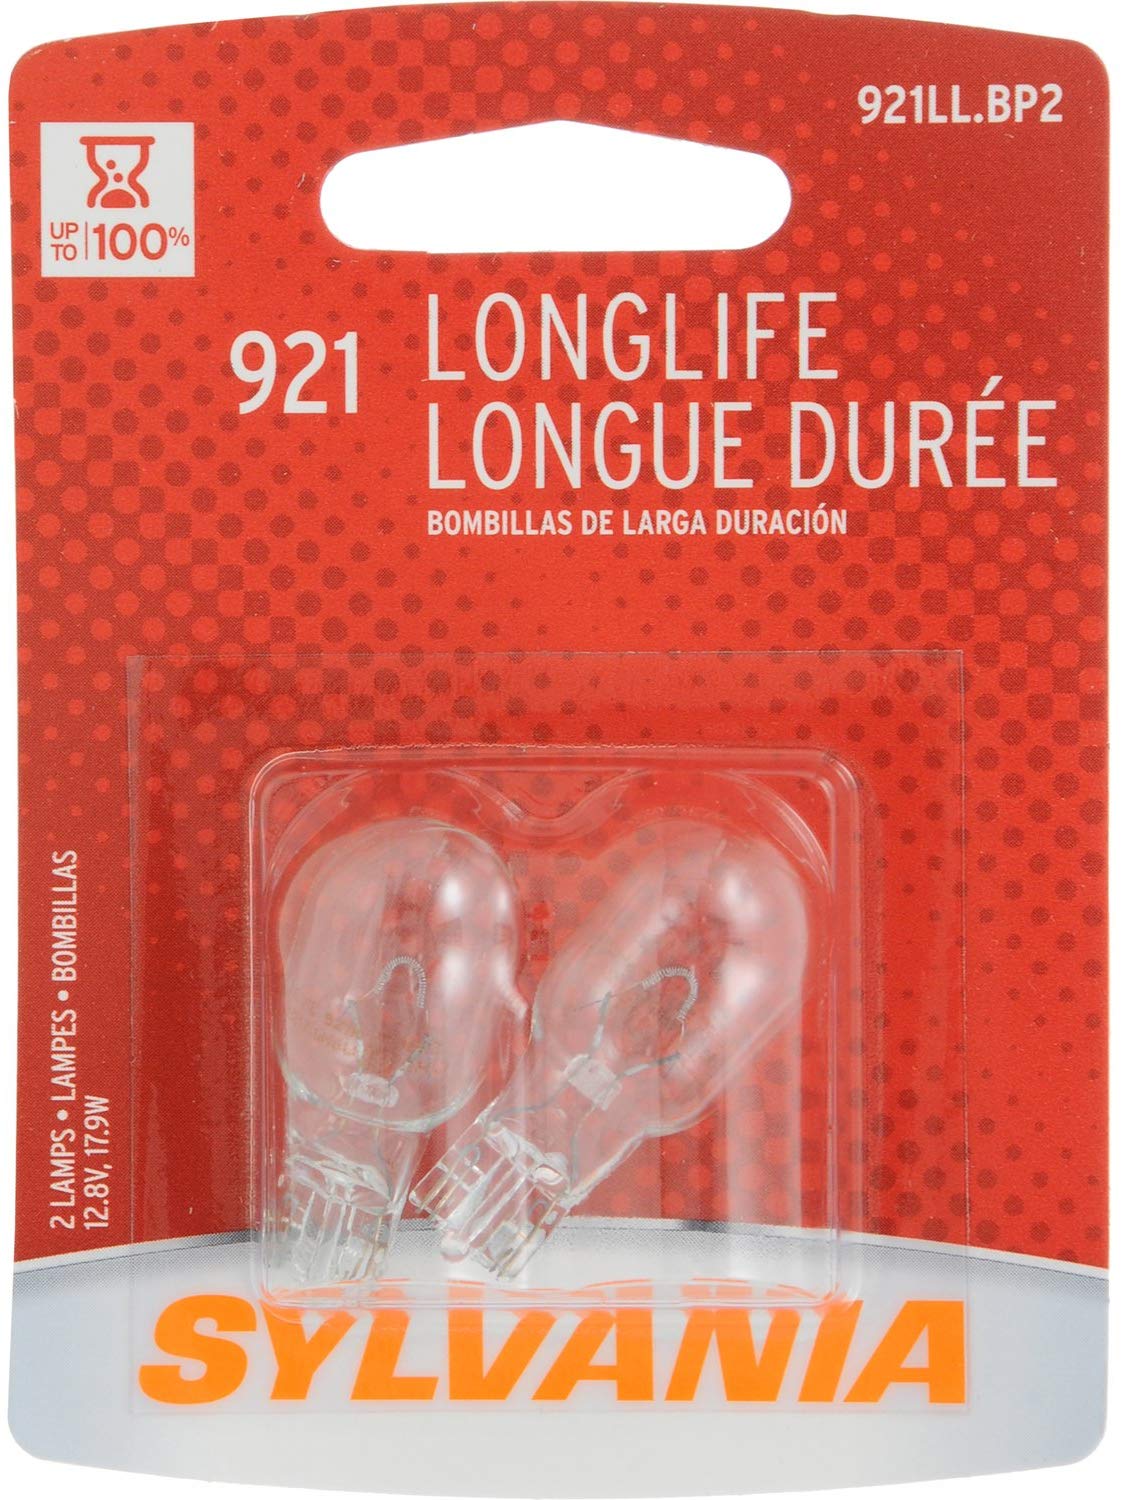 SYLVANIA 921 Long Life Miniature Bulb (Contains 2 Bulbs)